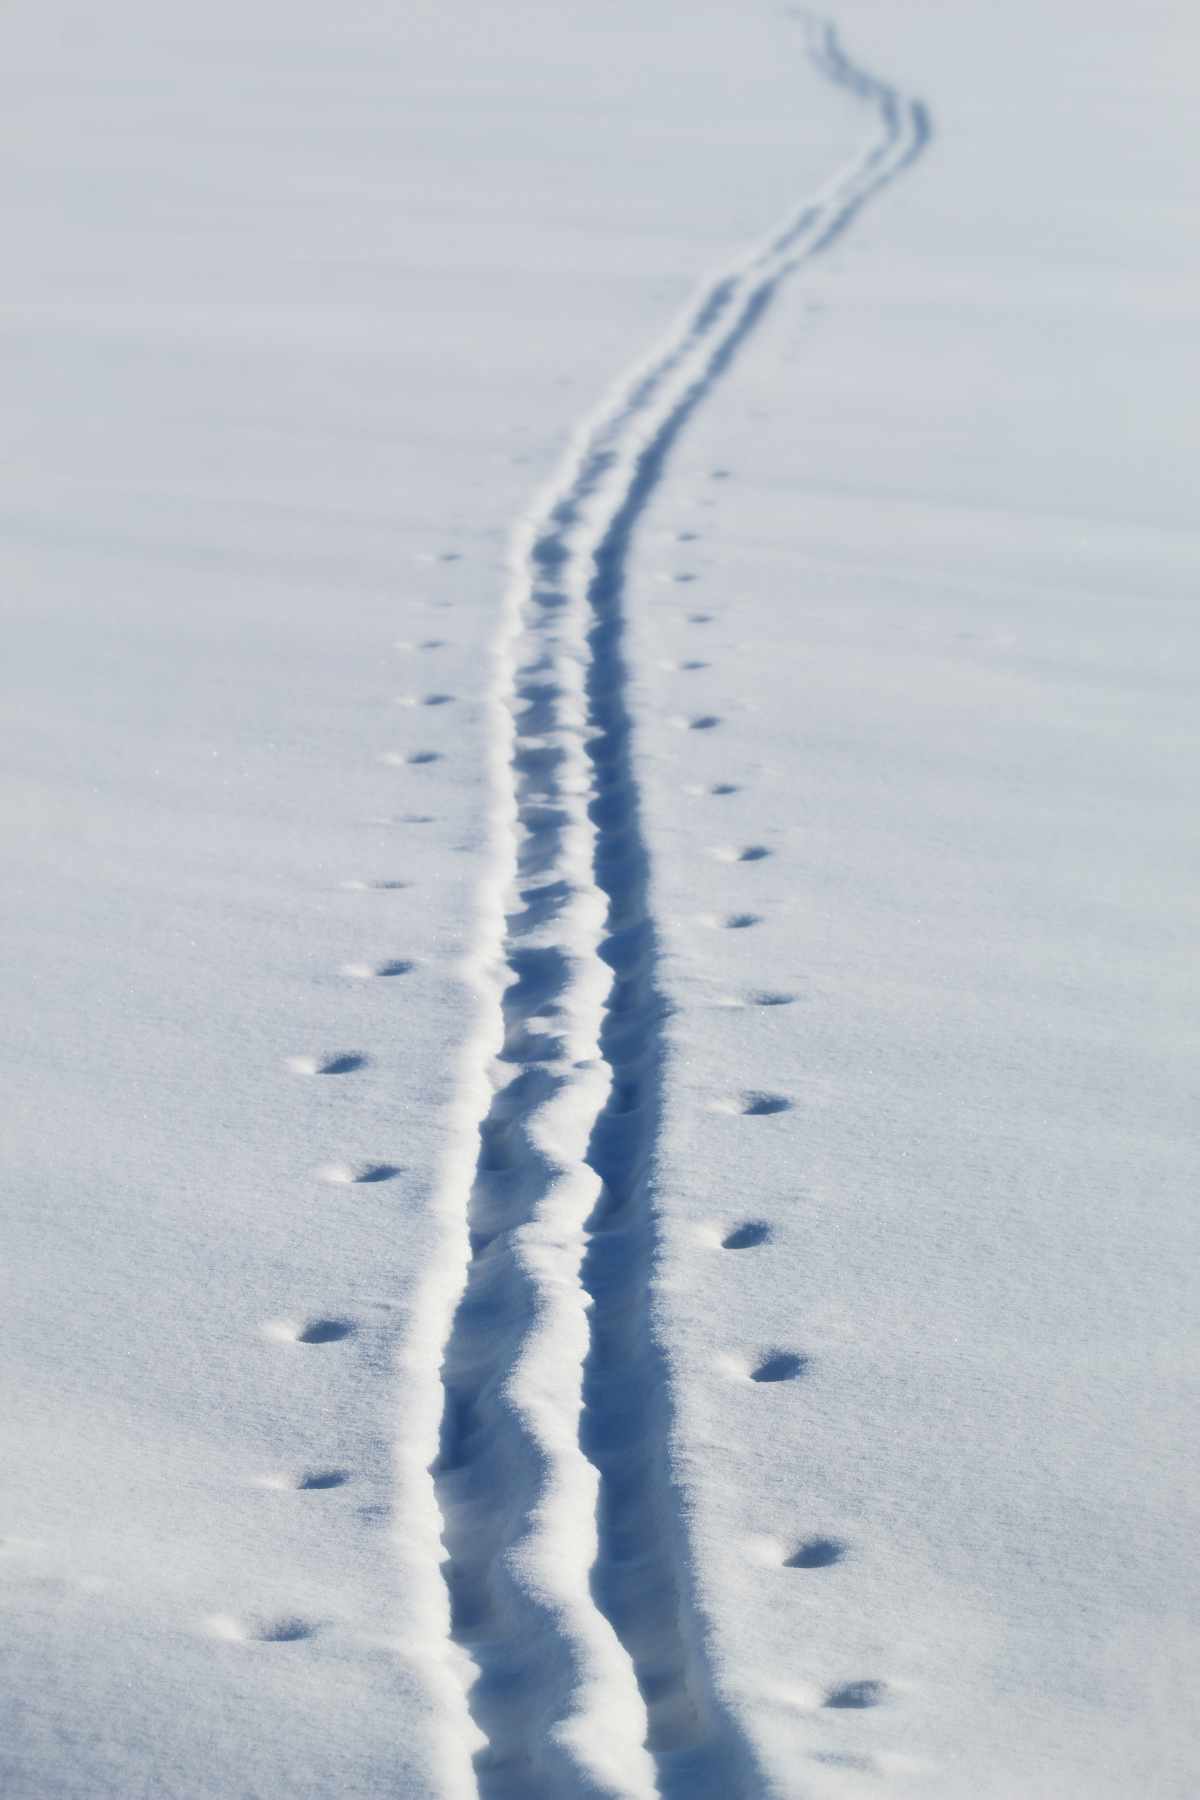 Ski tracks in the snow | by Anne Nyuguard on Unsplash